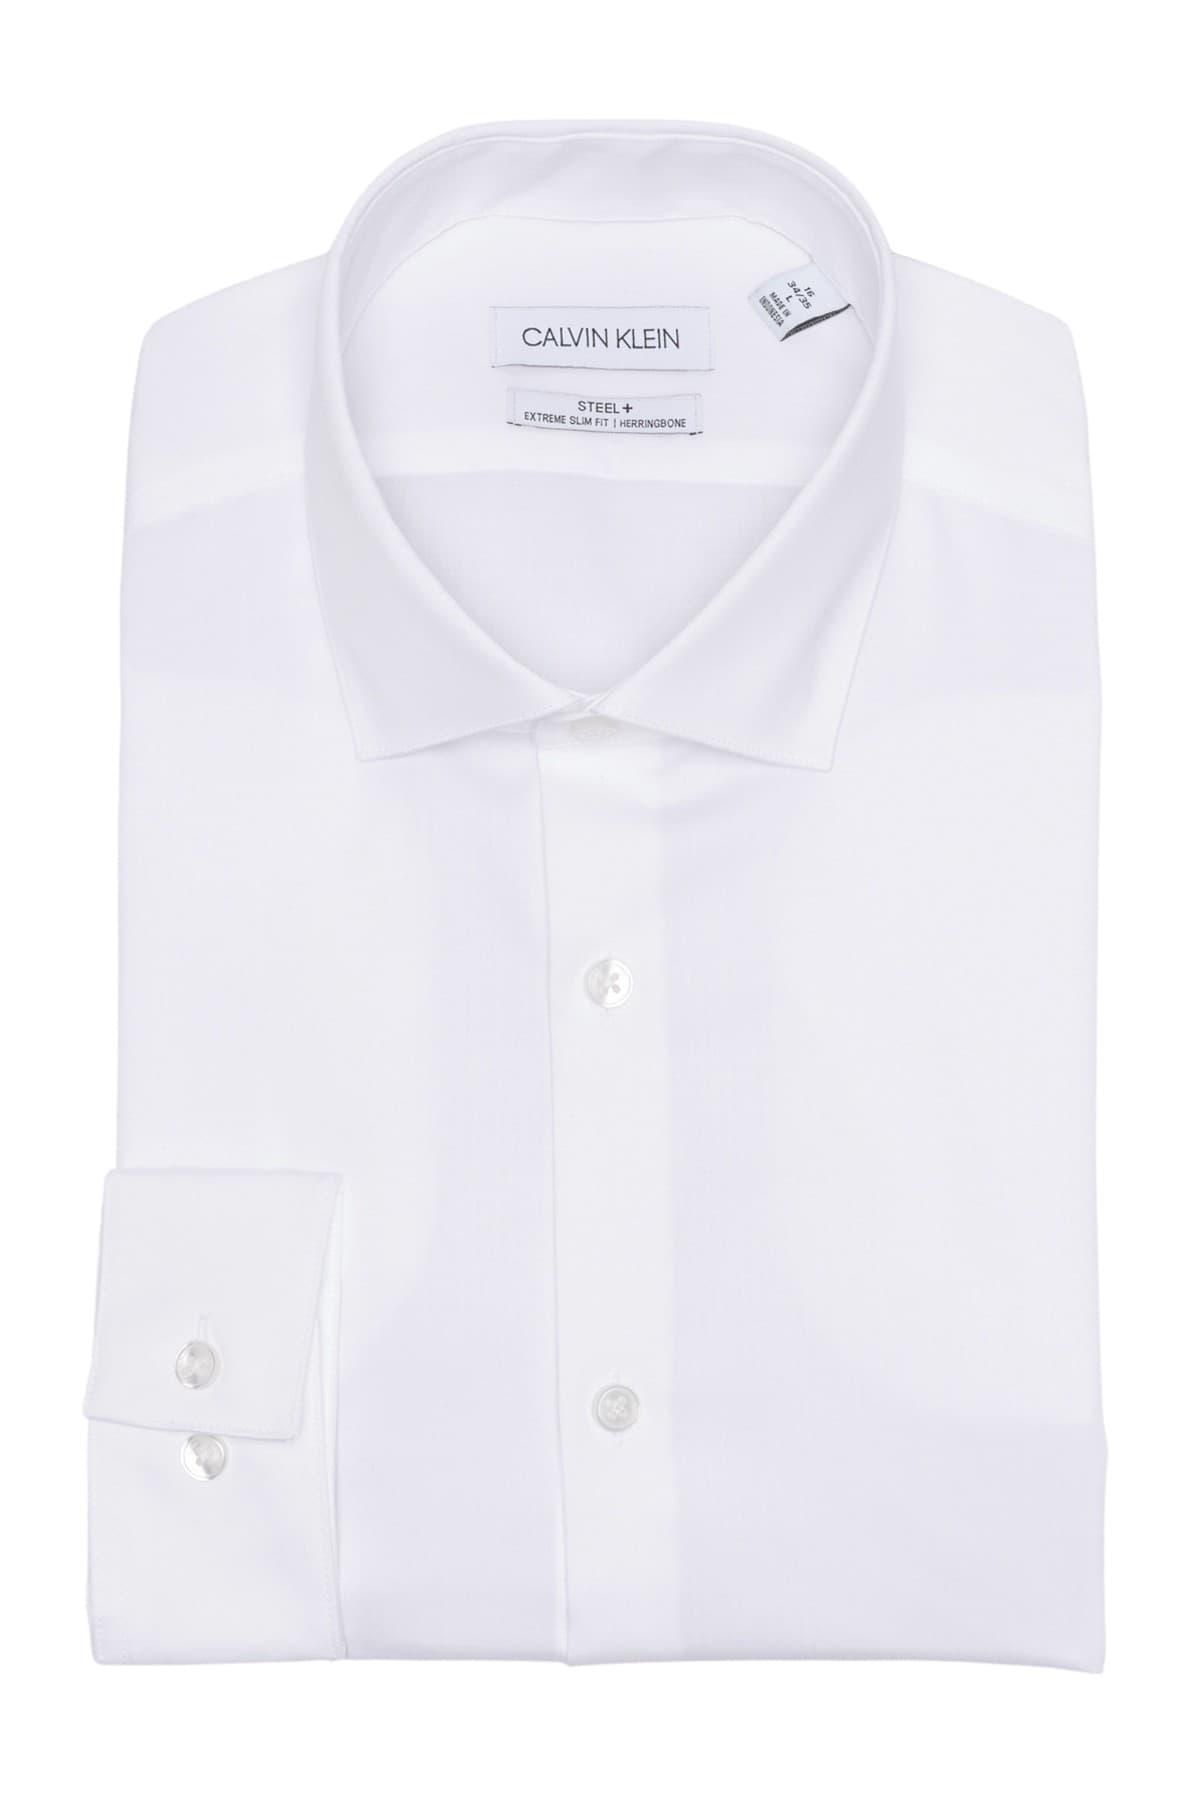 Calvin Klein Steel Extra-slim Fit Non-iron Performance Herringbone Dress  Shirt in White for Men | Lyst